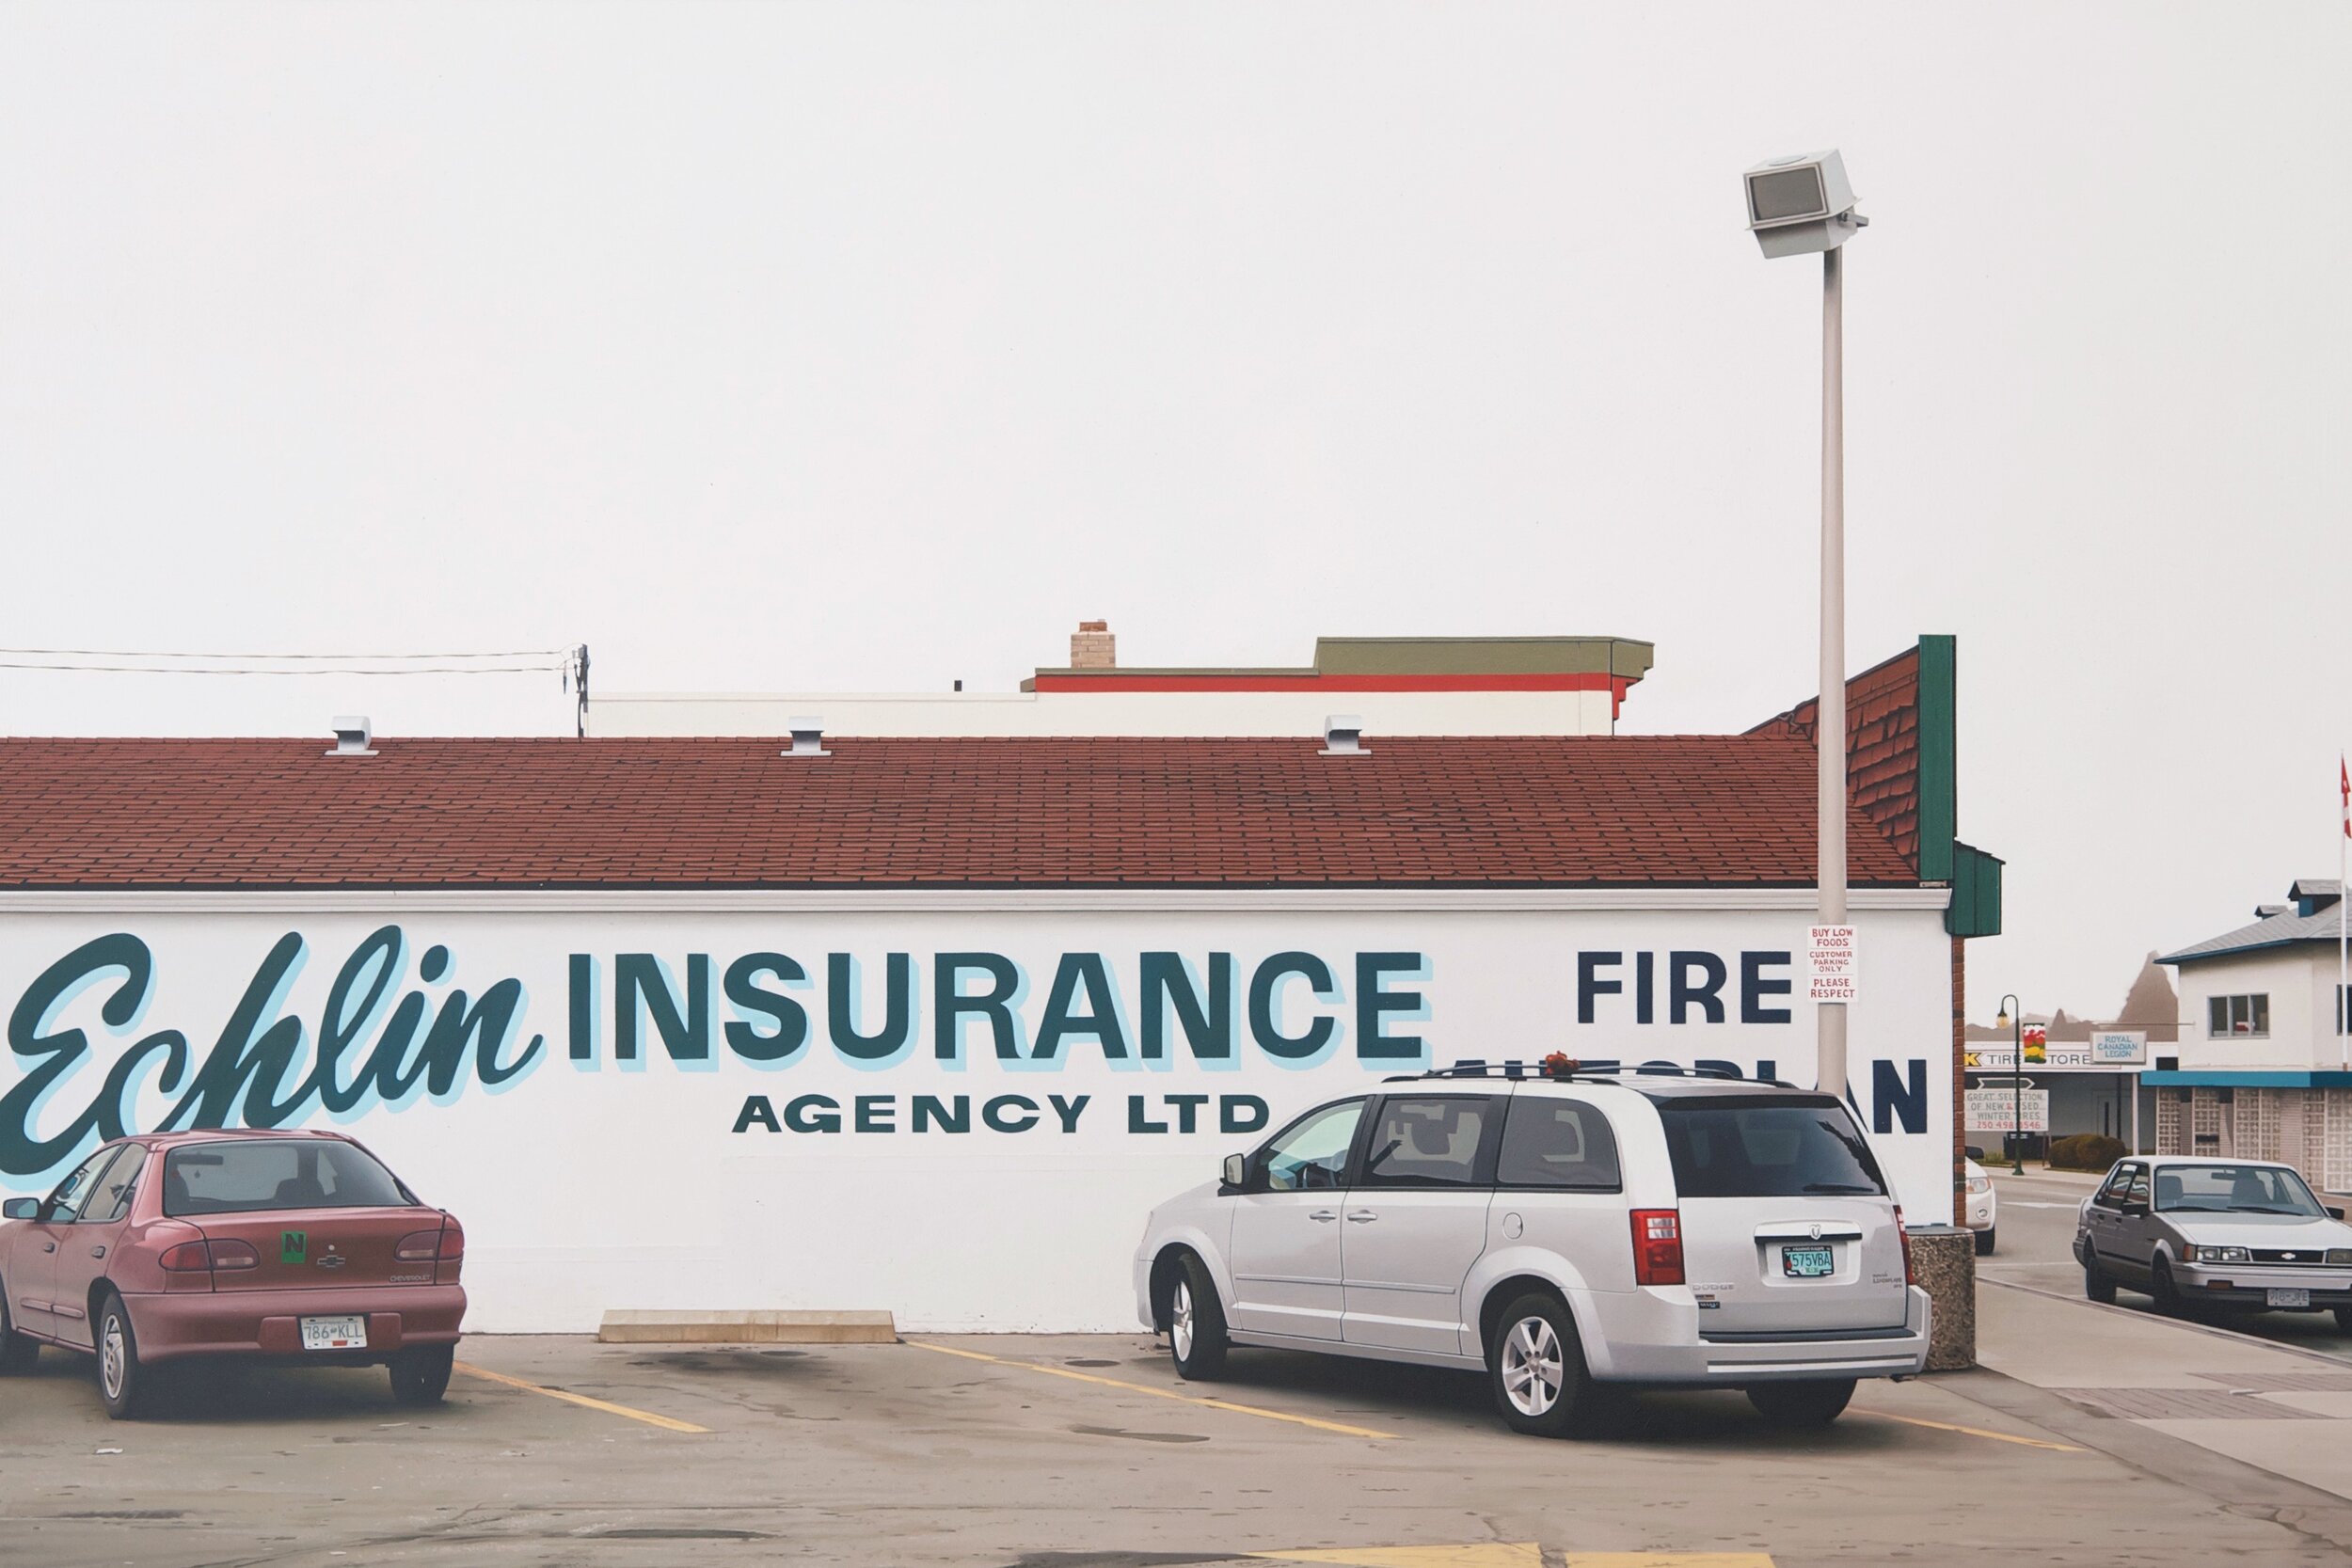   Mike Bayne ,  Echlin Insurance , 2019, Oil on wood panel, 16” x 24” 